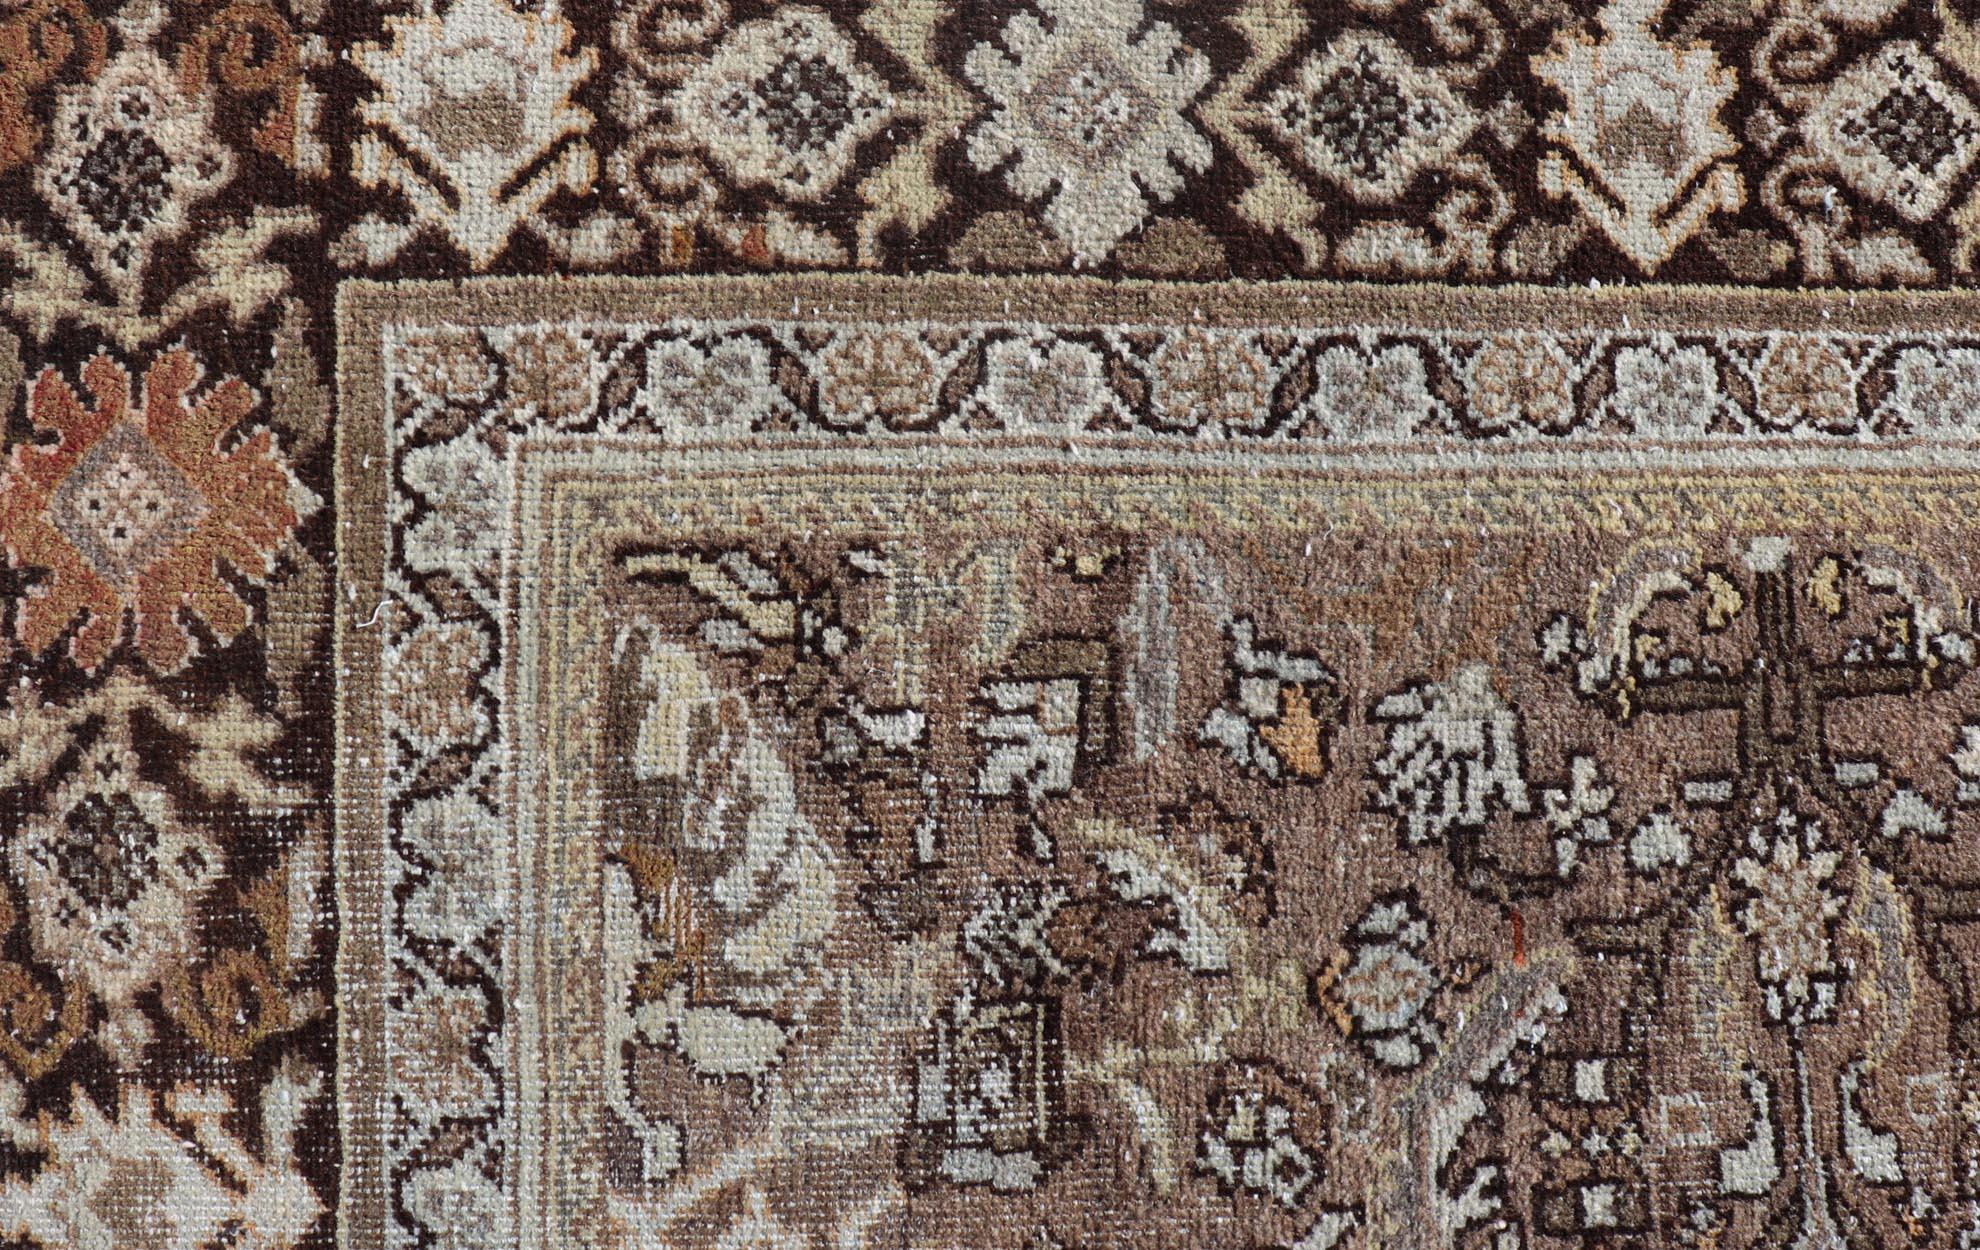 Vintage Mahal Rug, Keivan Woven Arts / rug PTA-200702, country of origin / type: Persian / Sultanabad-Mahal, circa Early-20th century.

Measures: 6'8 x 10'0.